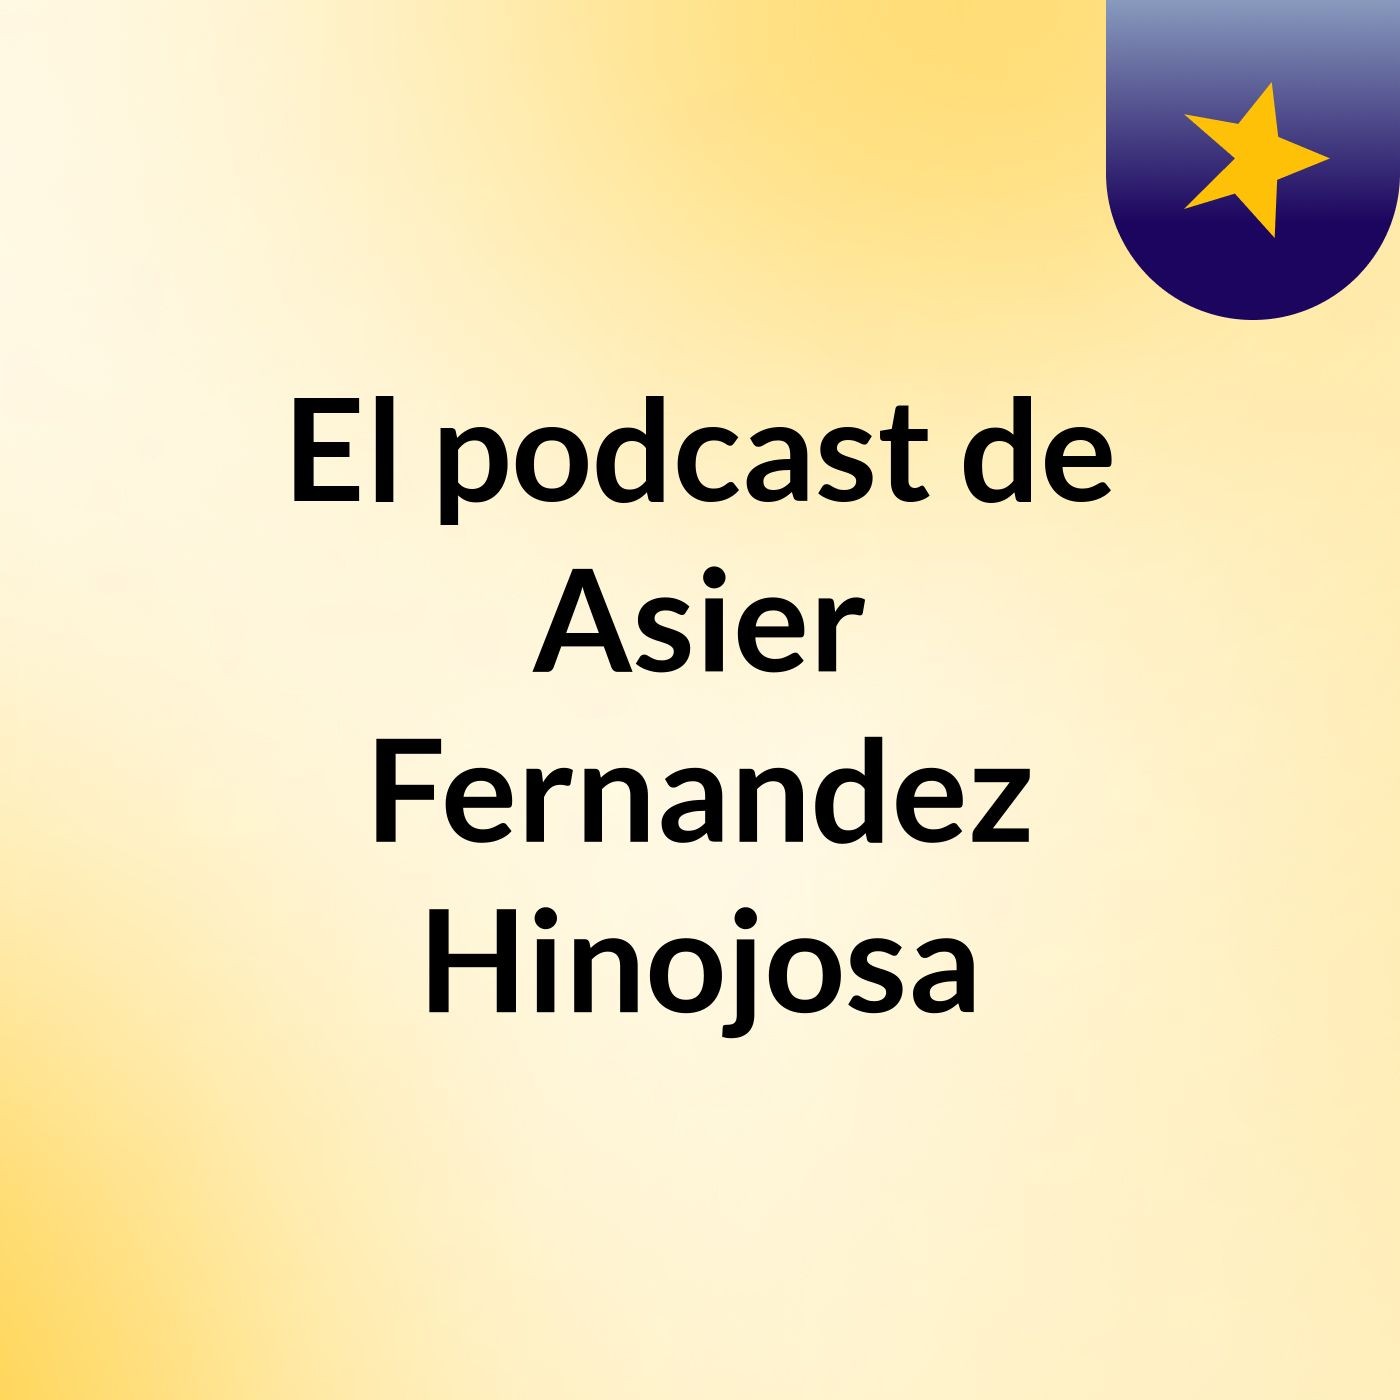 El podcast de Asier Fernandez Hinojosa